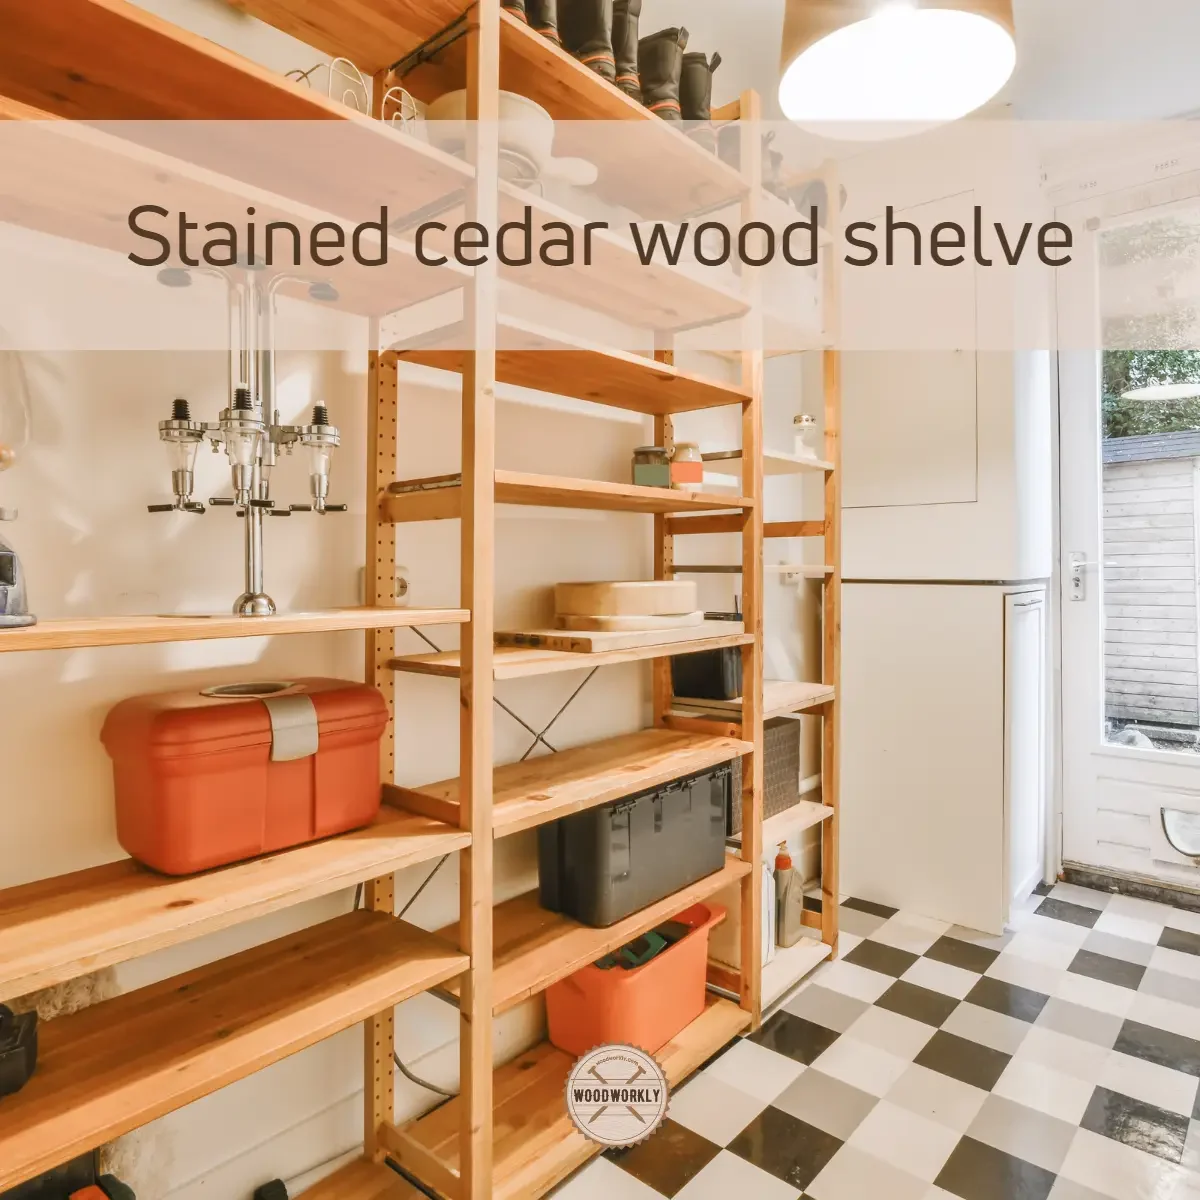 Stained cedar wood shelve